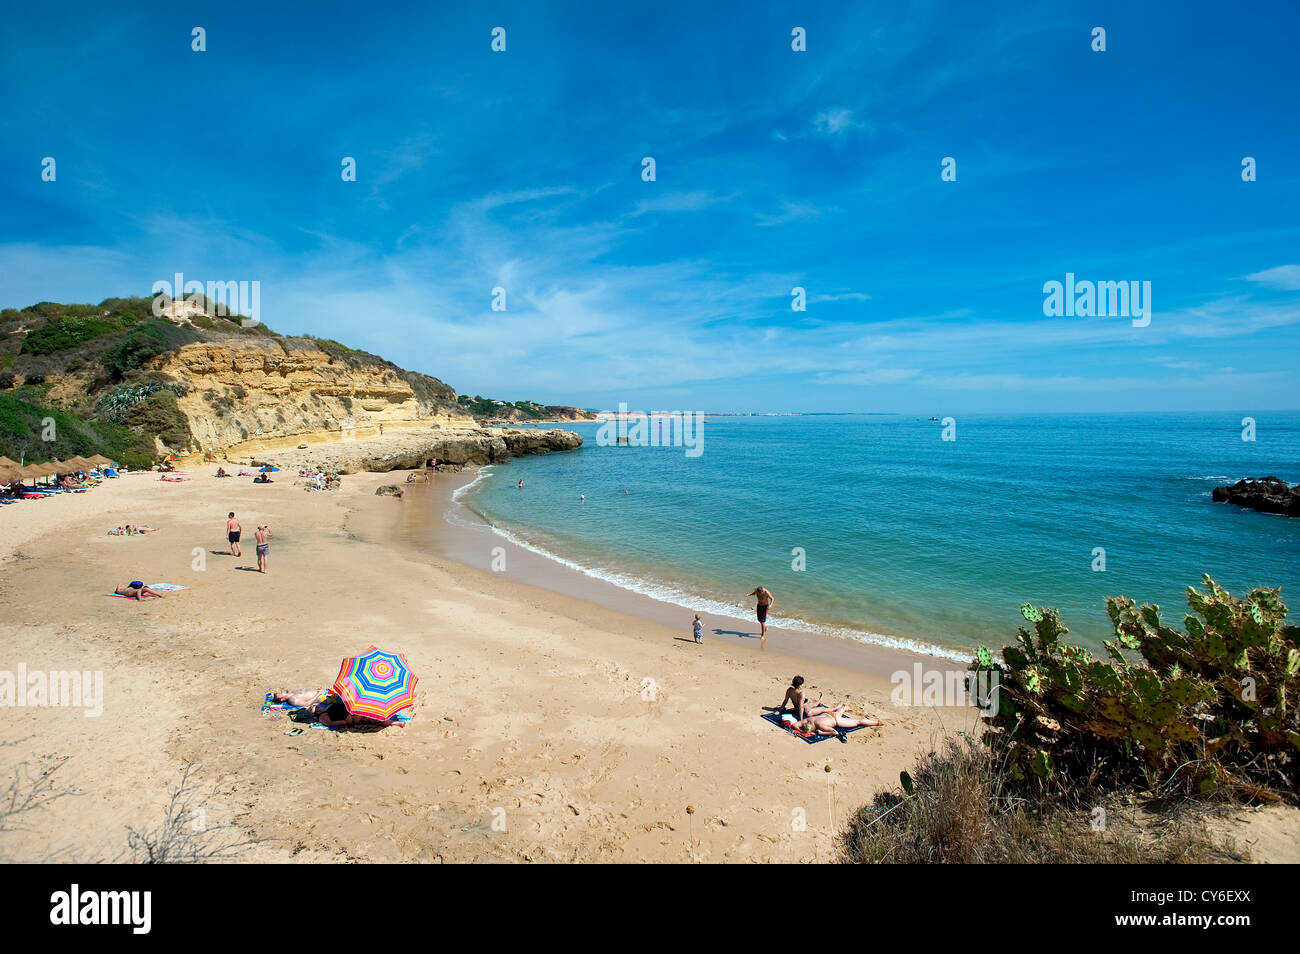 Praia dos Aveiros Beach, Algarve, Portugal Stock Photo